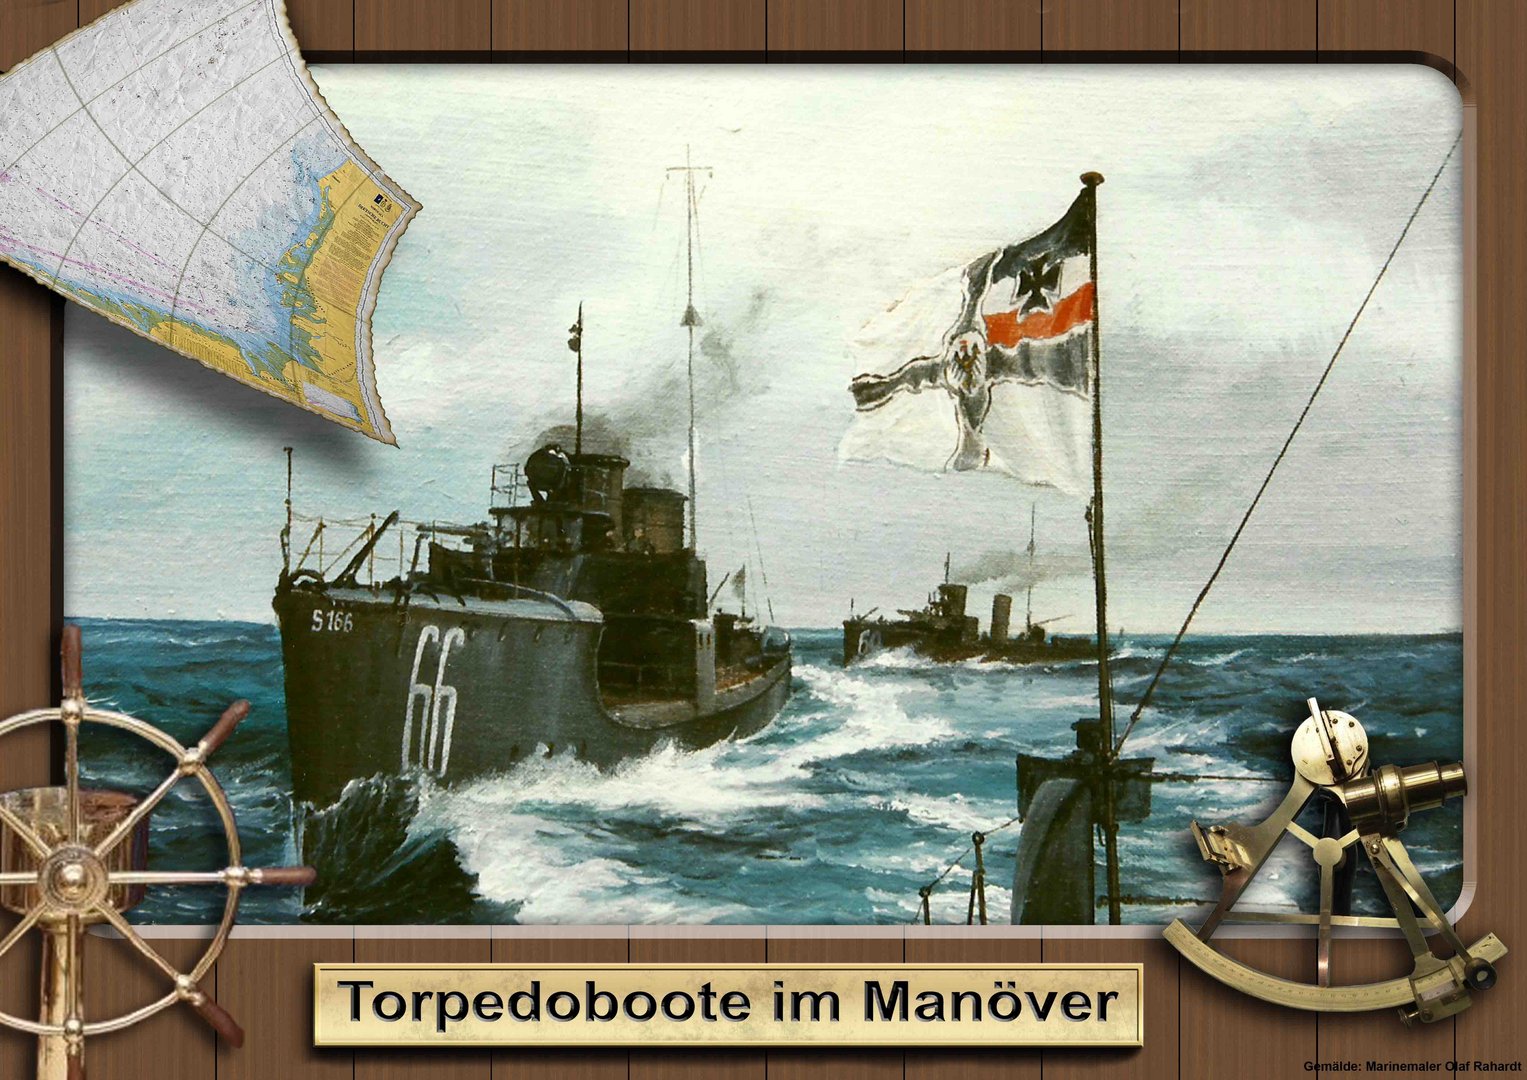 Torpedoboote im Manöver